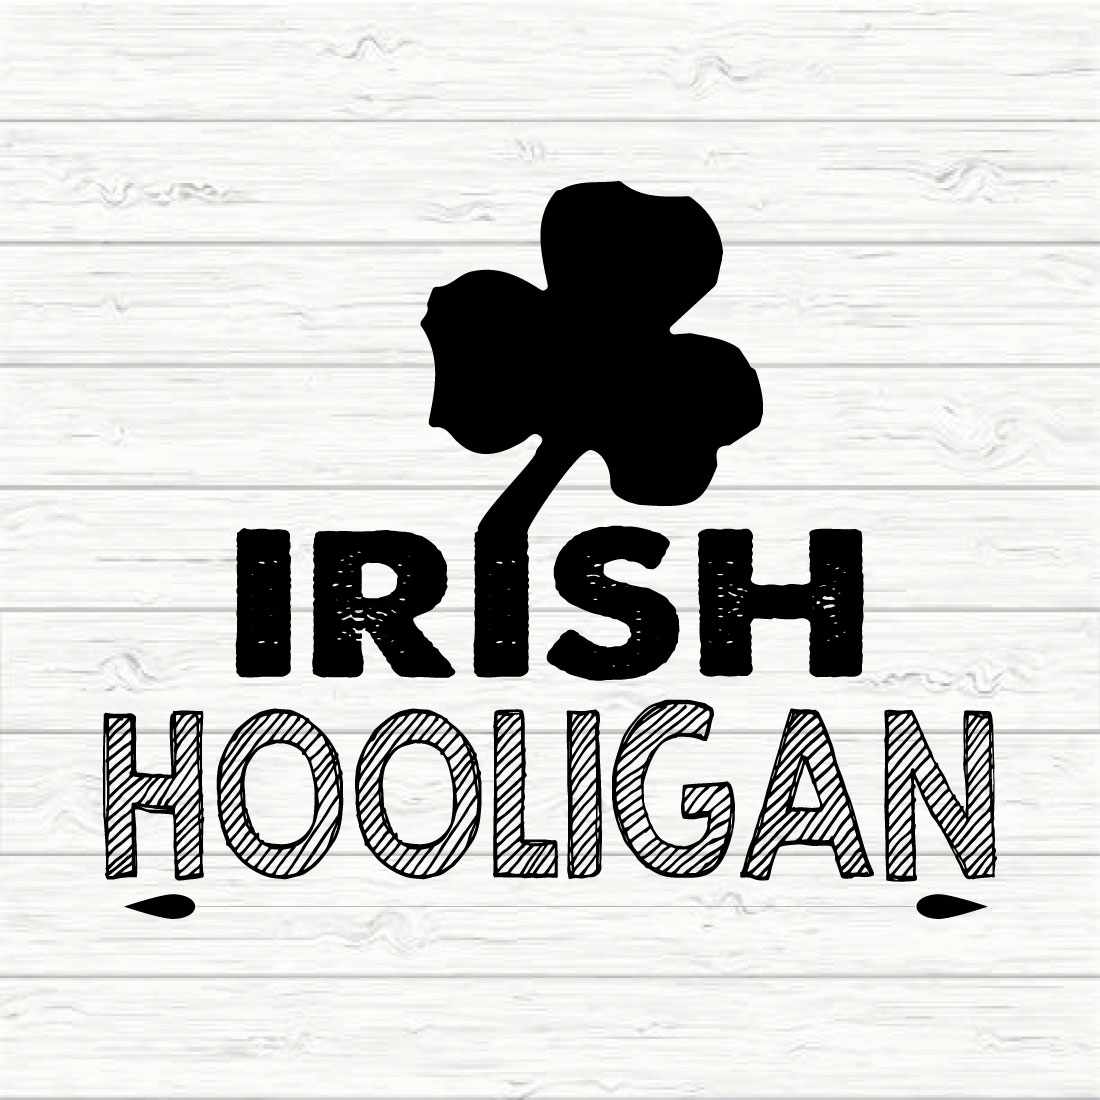 Irish Hooligan cover image.